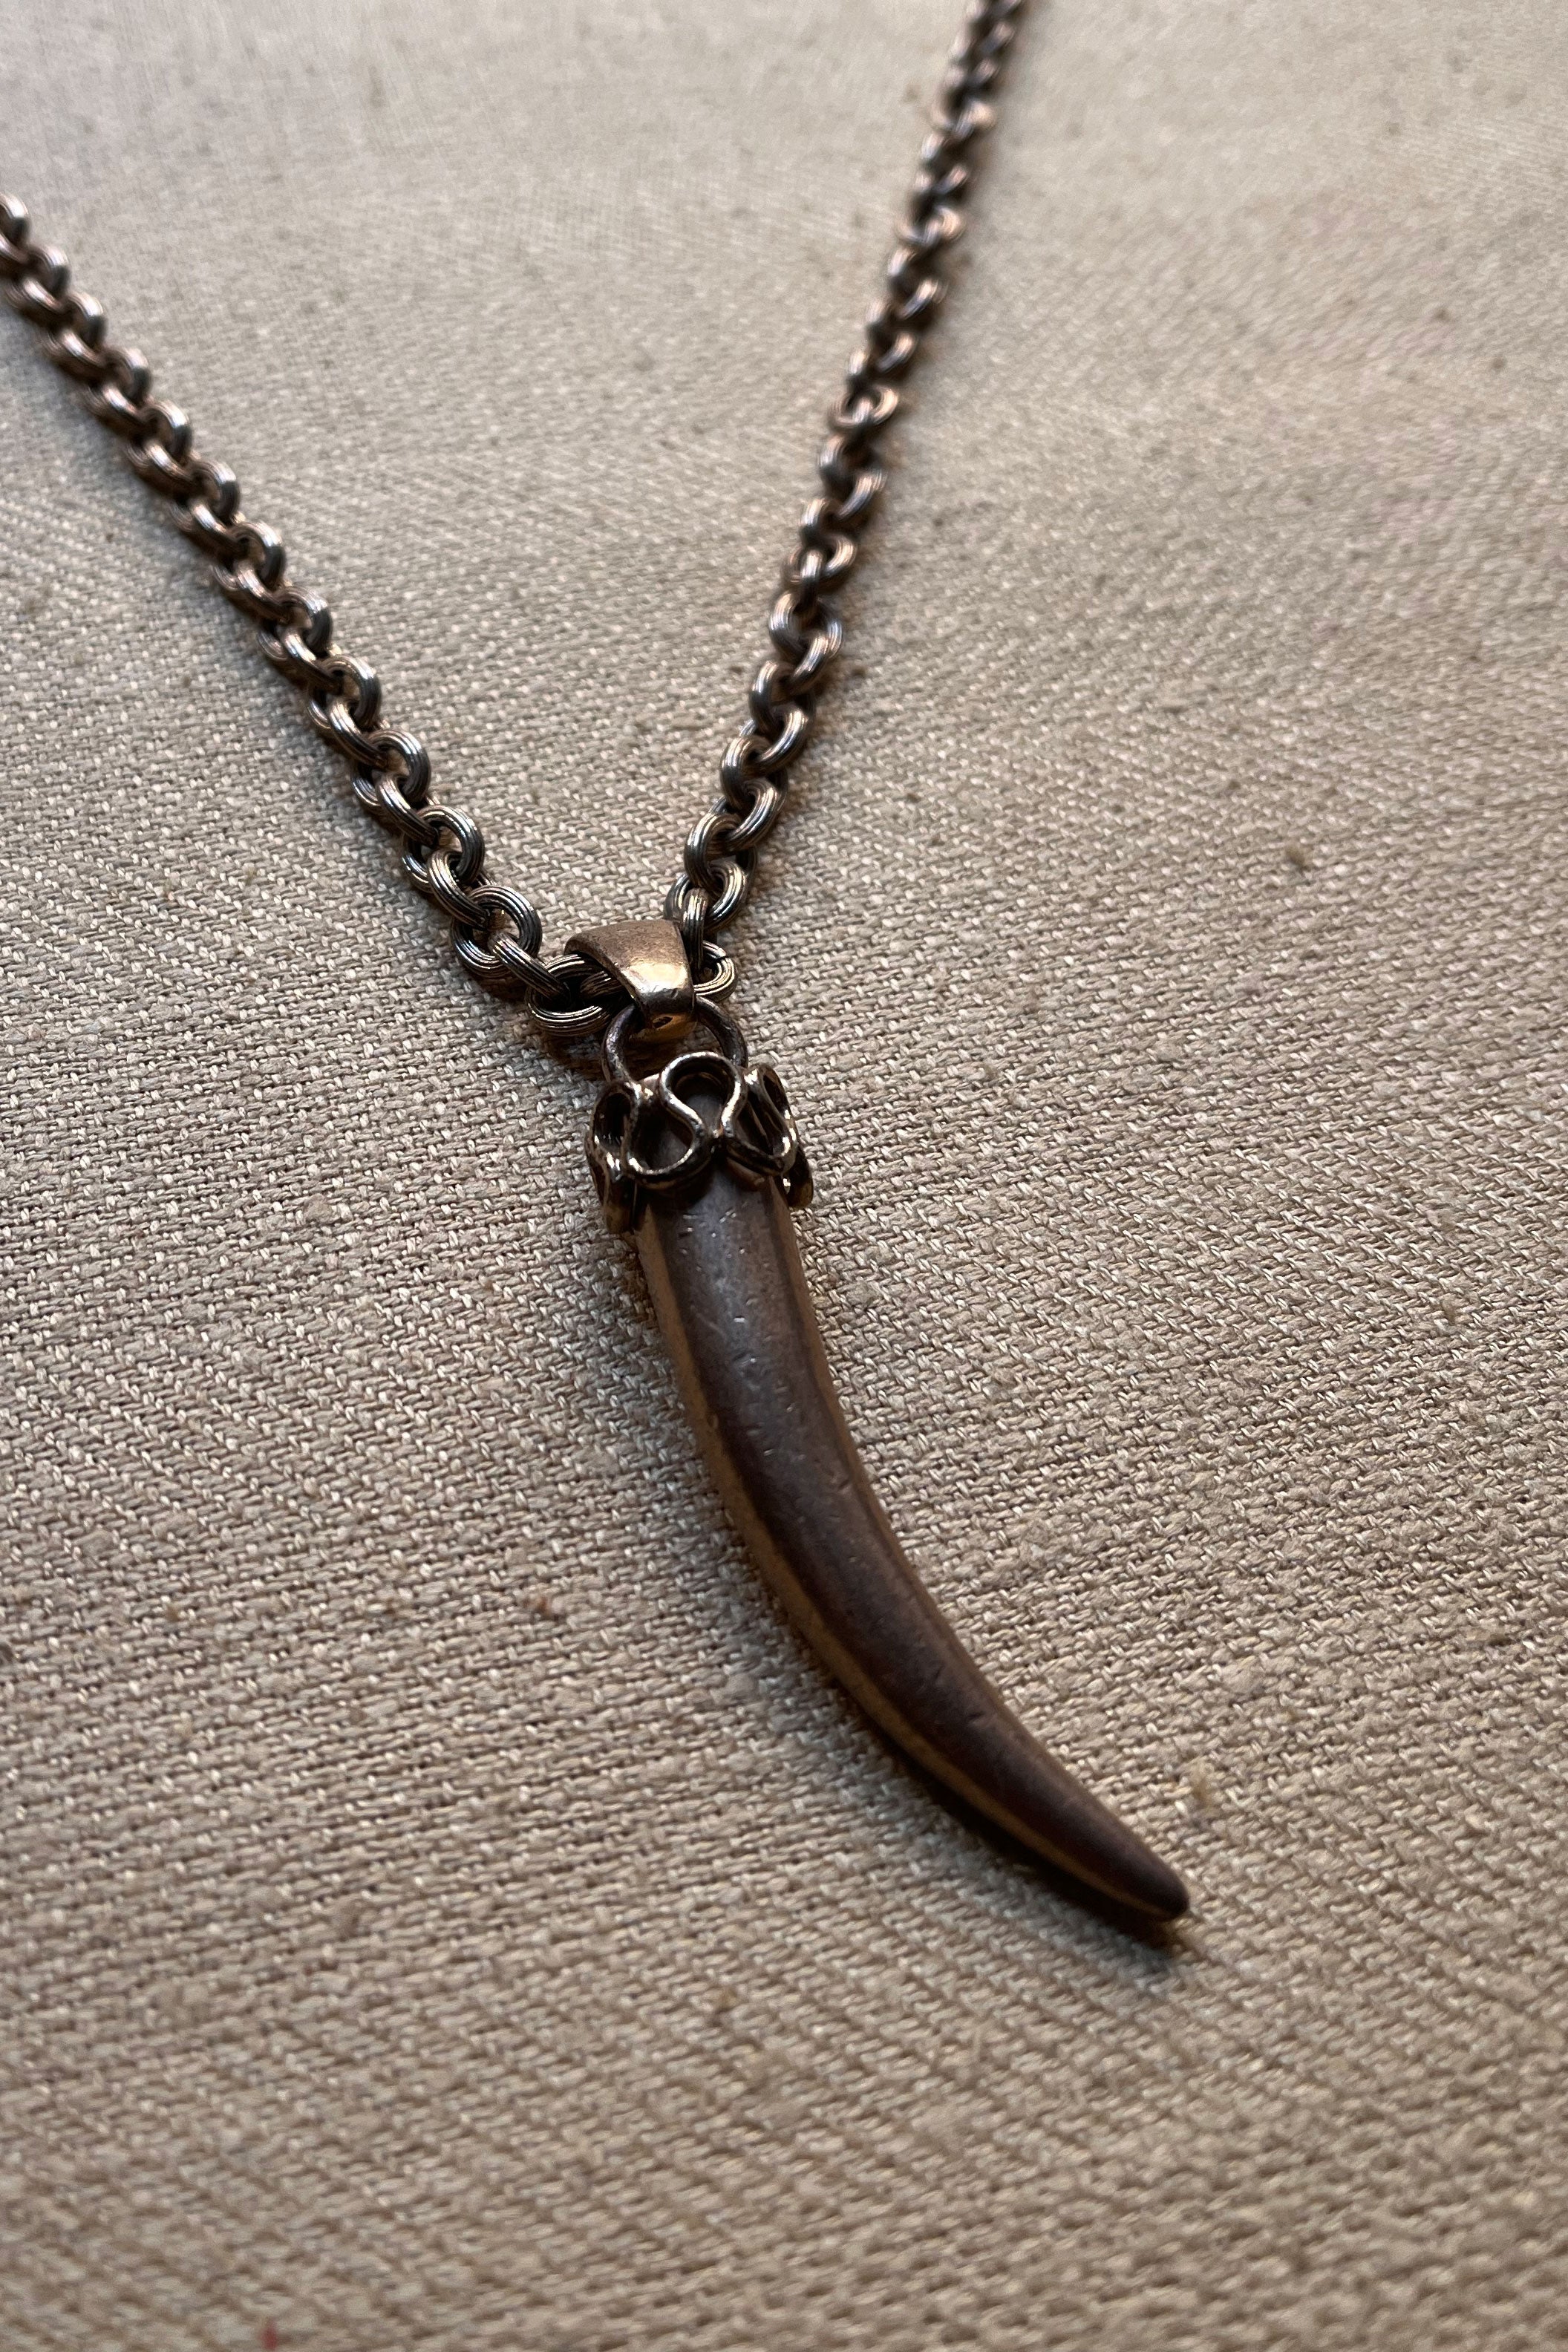 Silver tone tusk pendant necklace